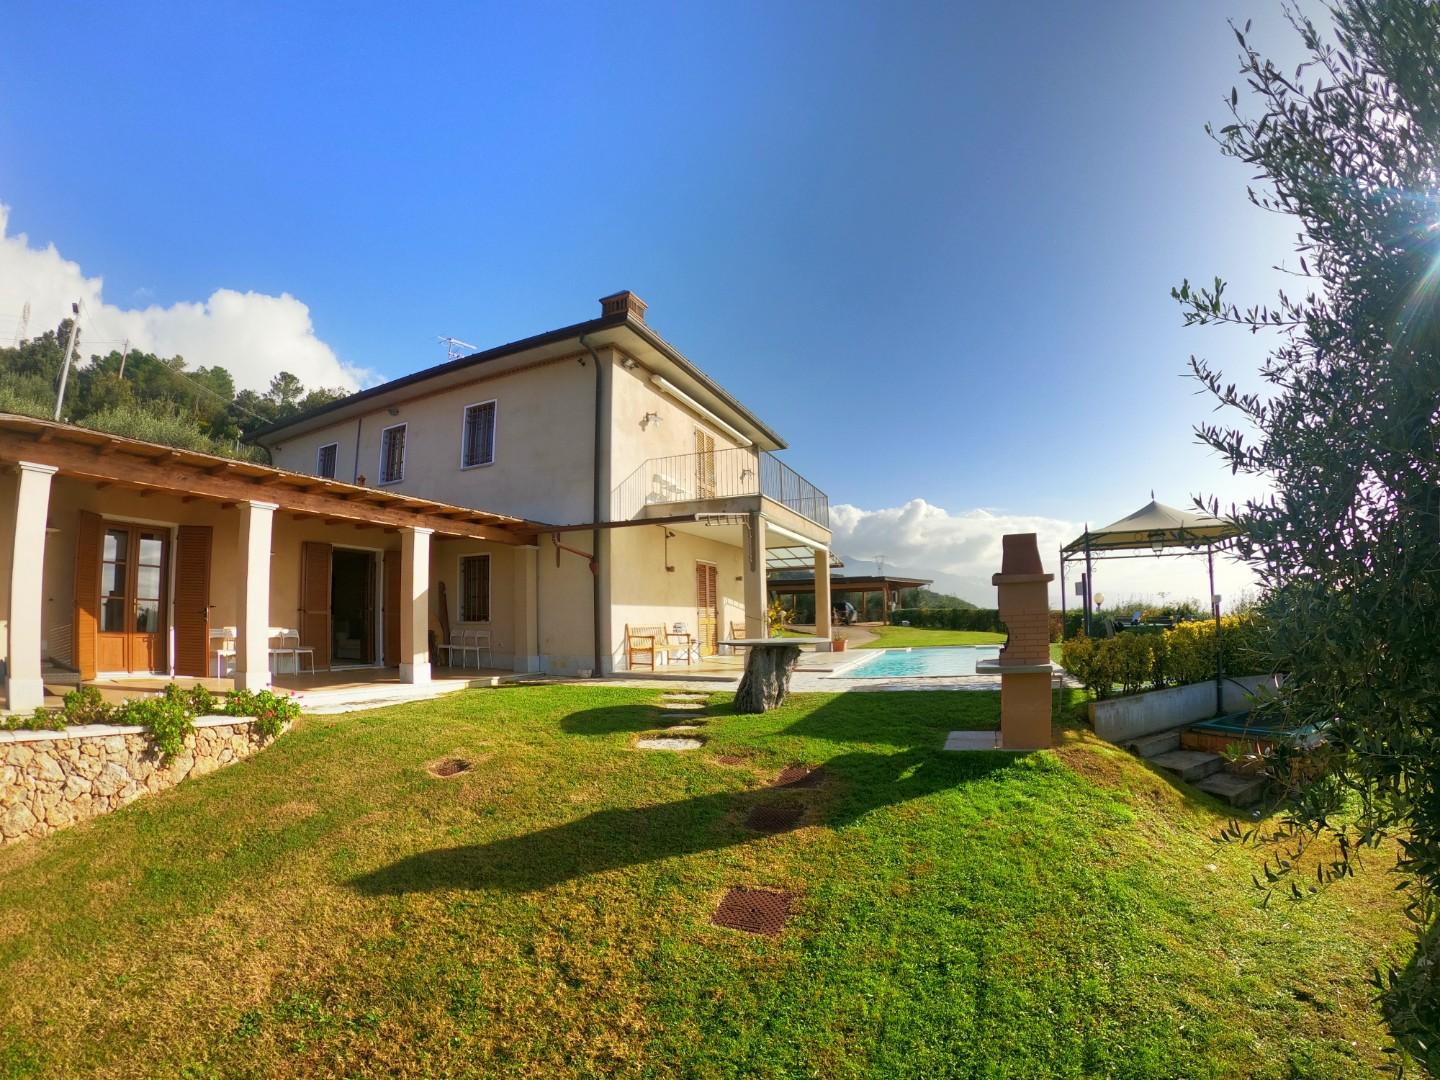 Villa for holiday rentals in Montignoso (MS)